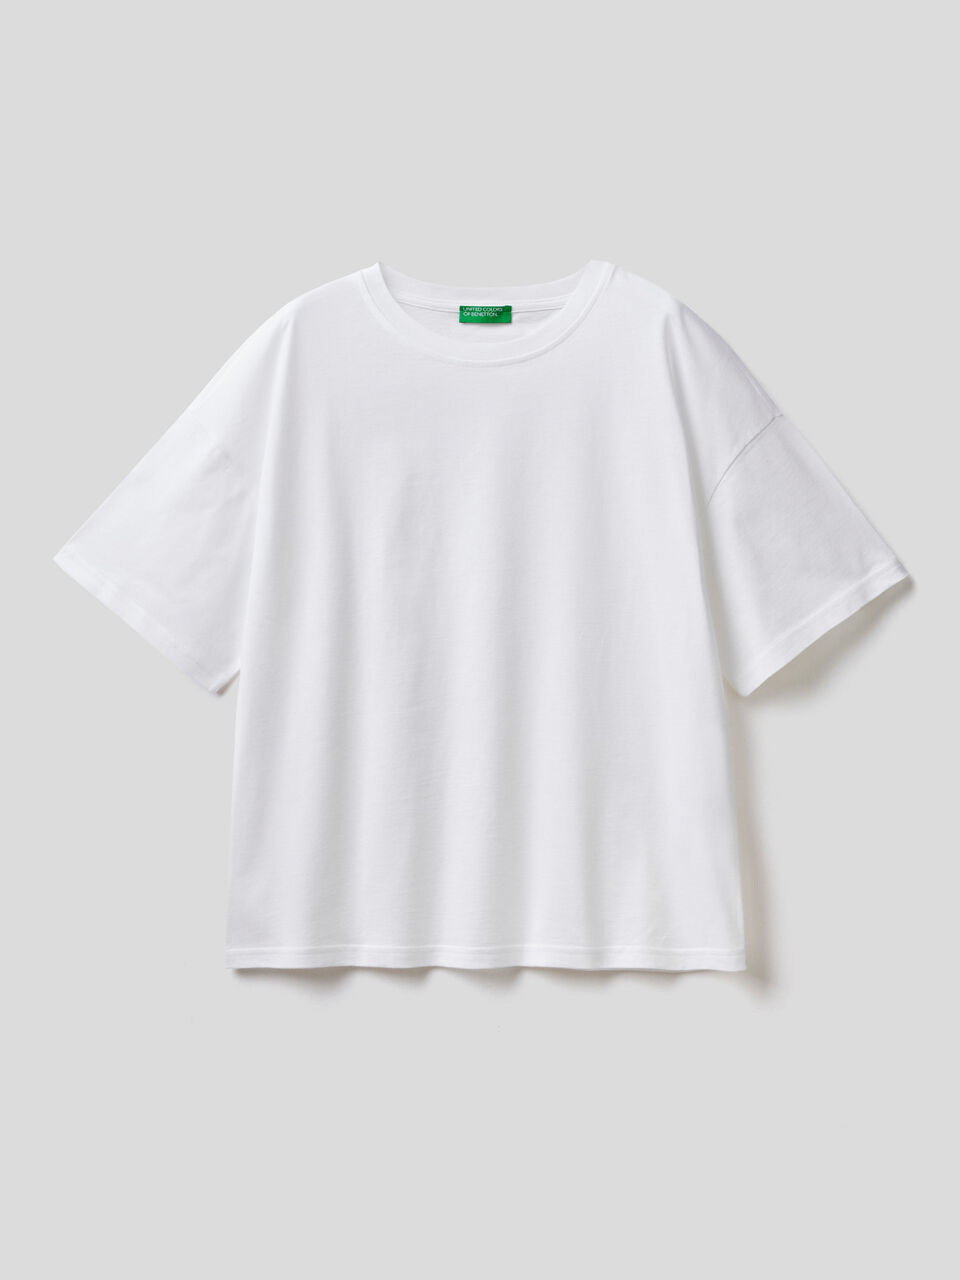 Camiseta blanca de Benetton